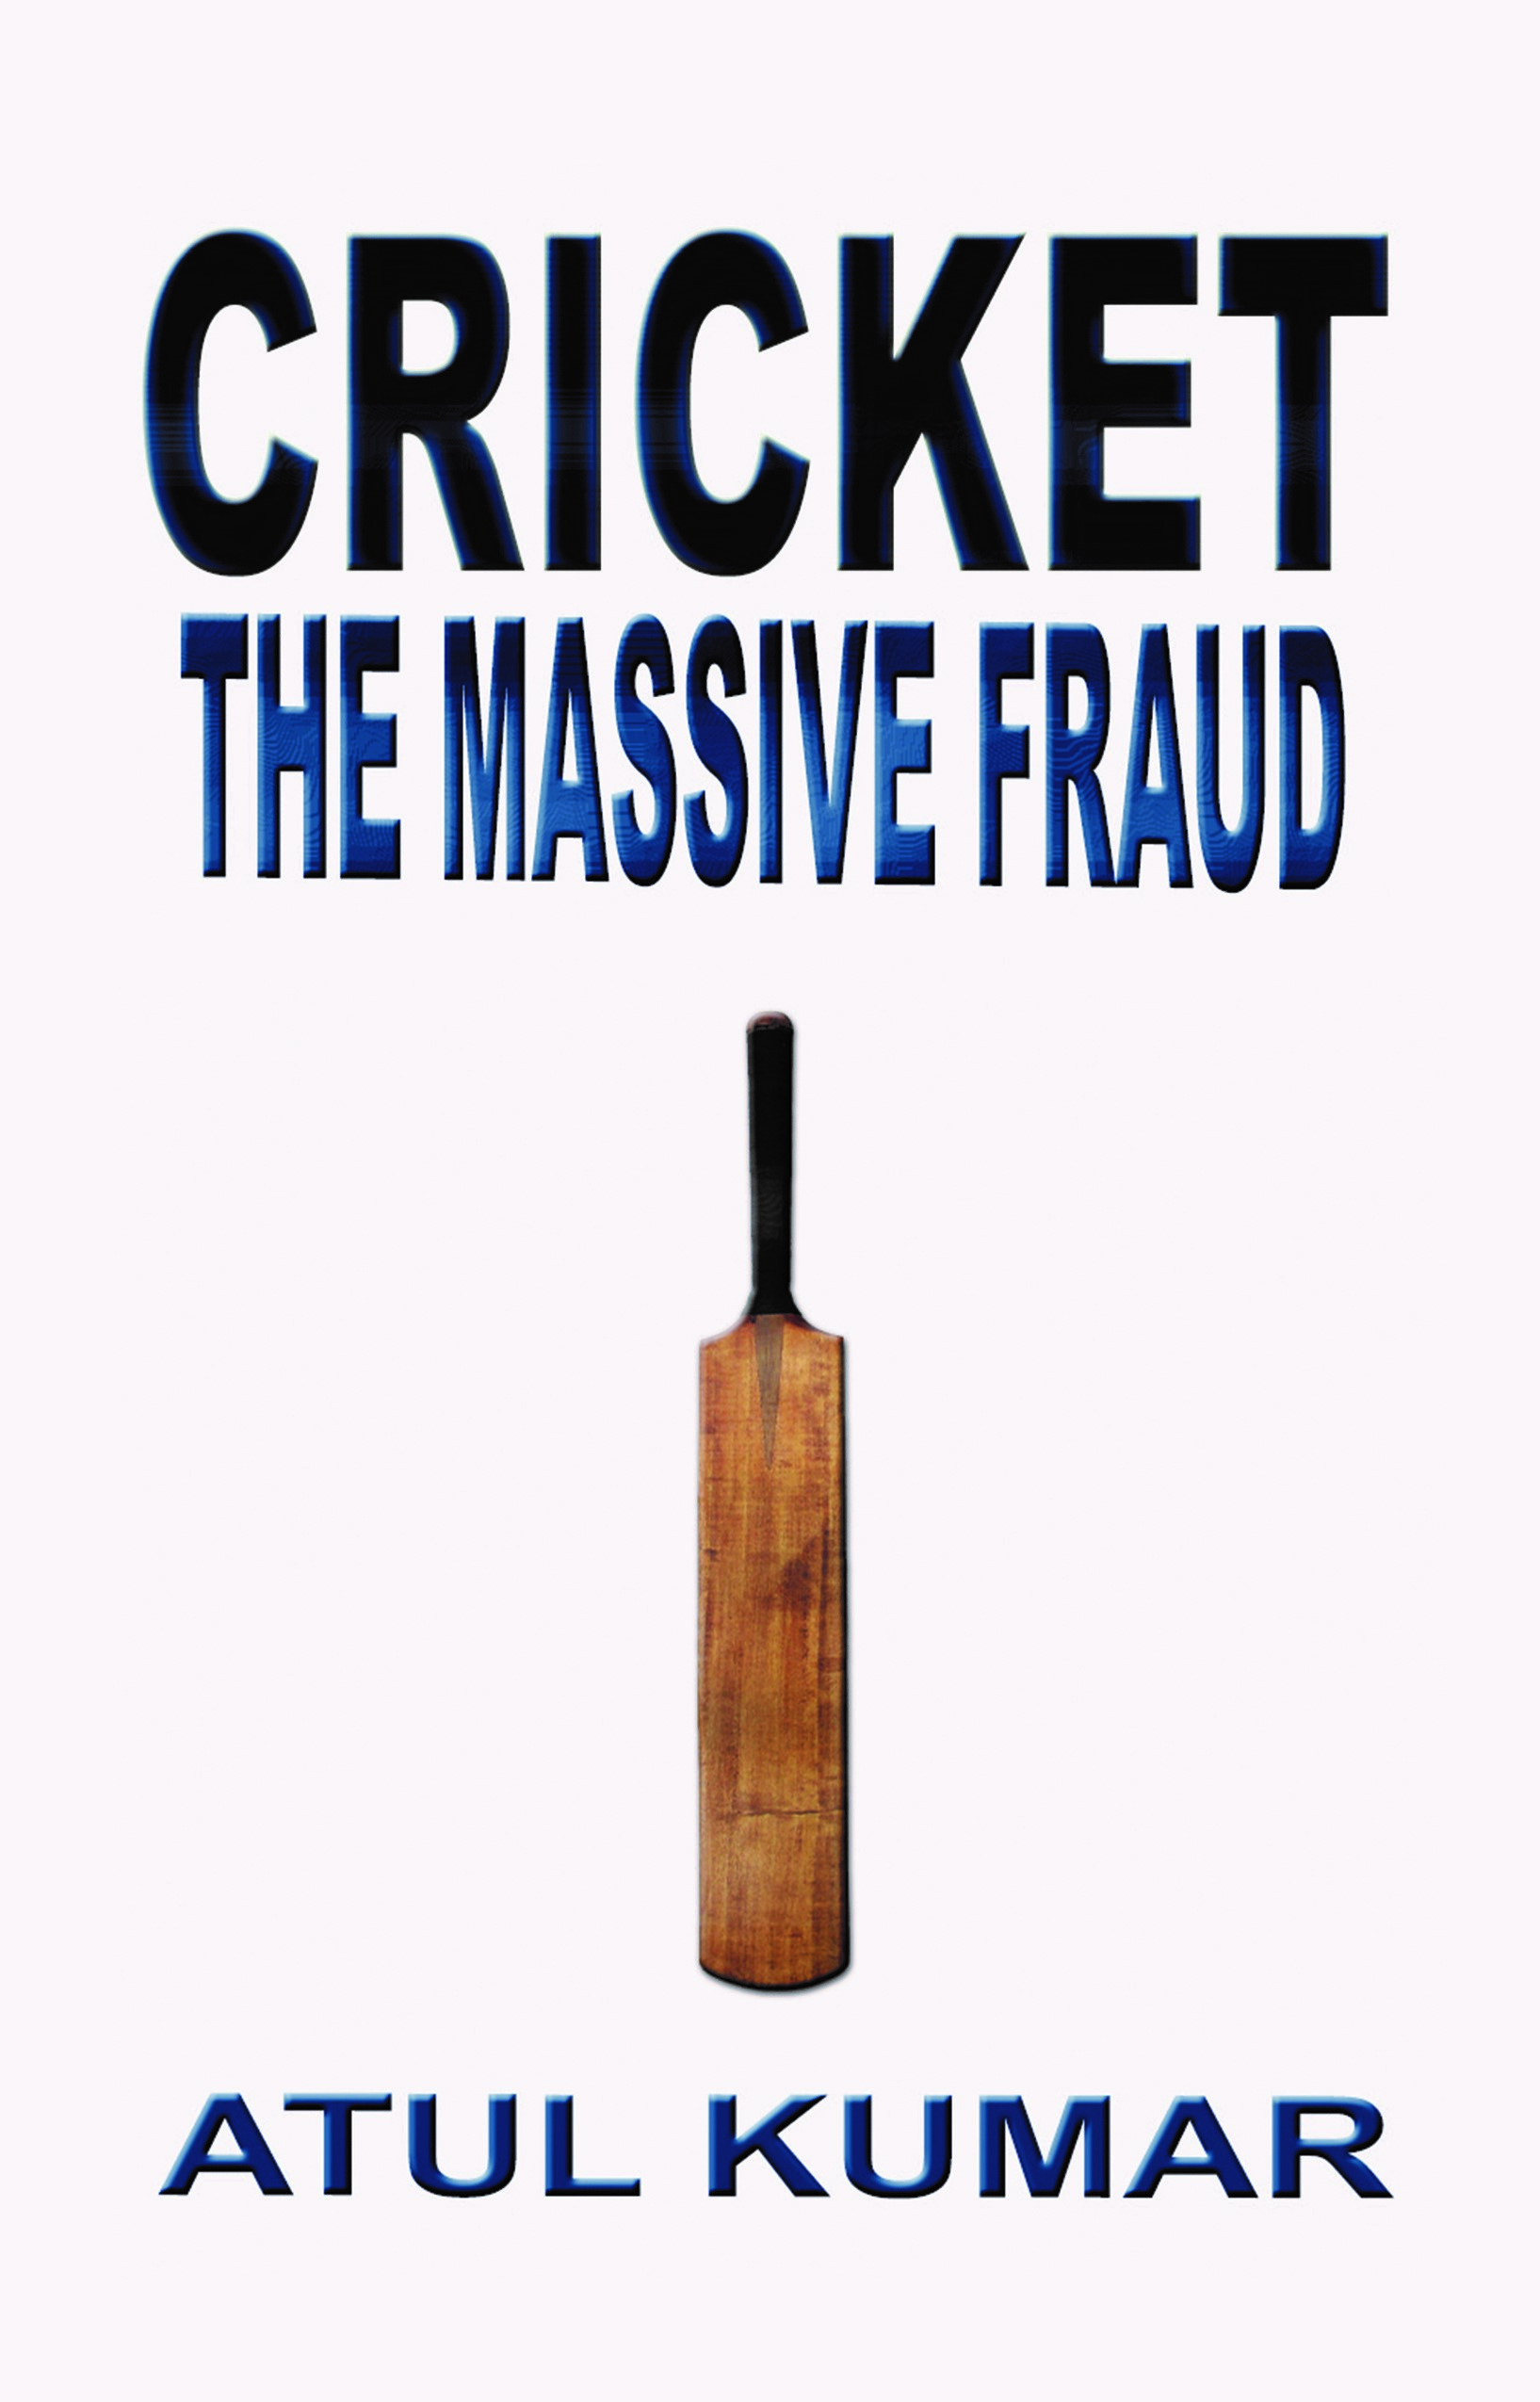 Cricket the massive fraud